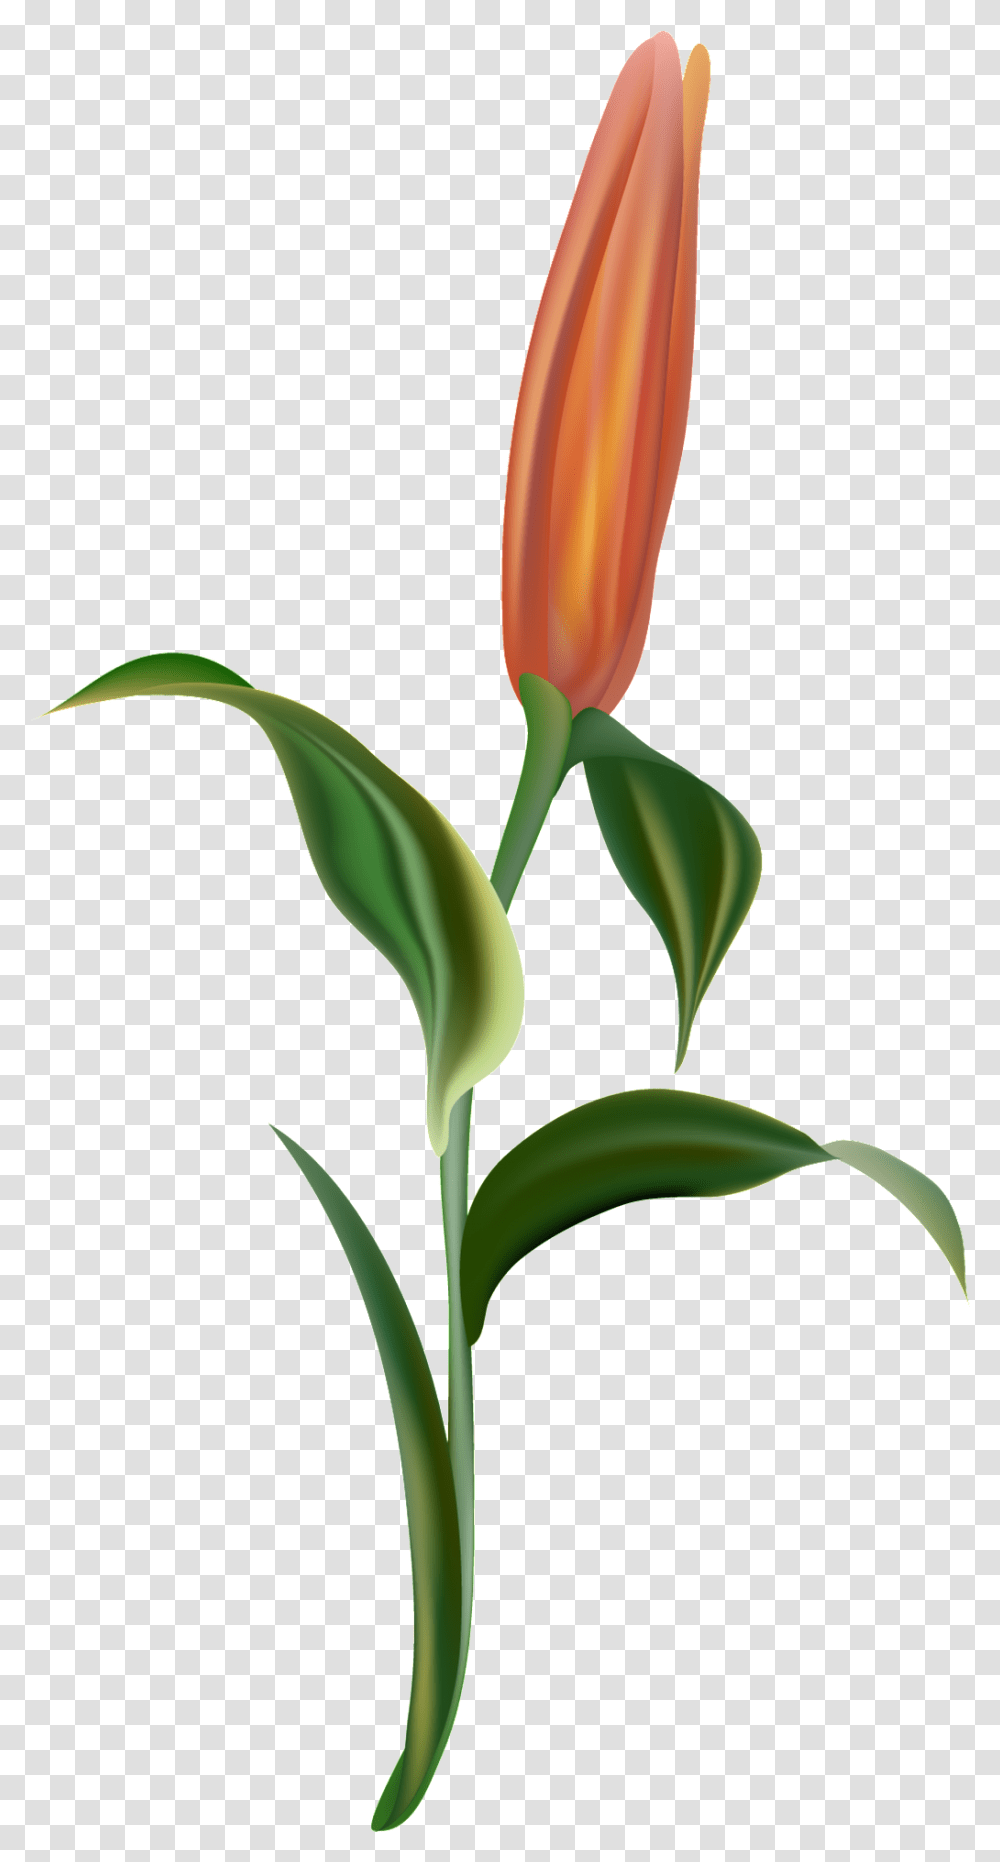 Orange Light Flower Branch Decorative Lady Lady Tulip, Plant, Blossom Transparent Png